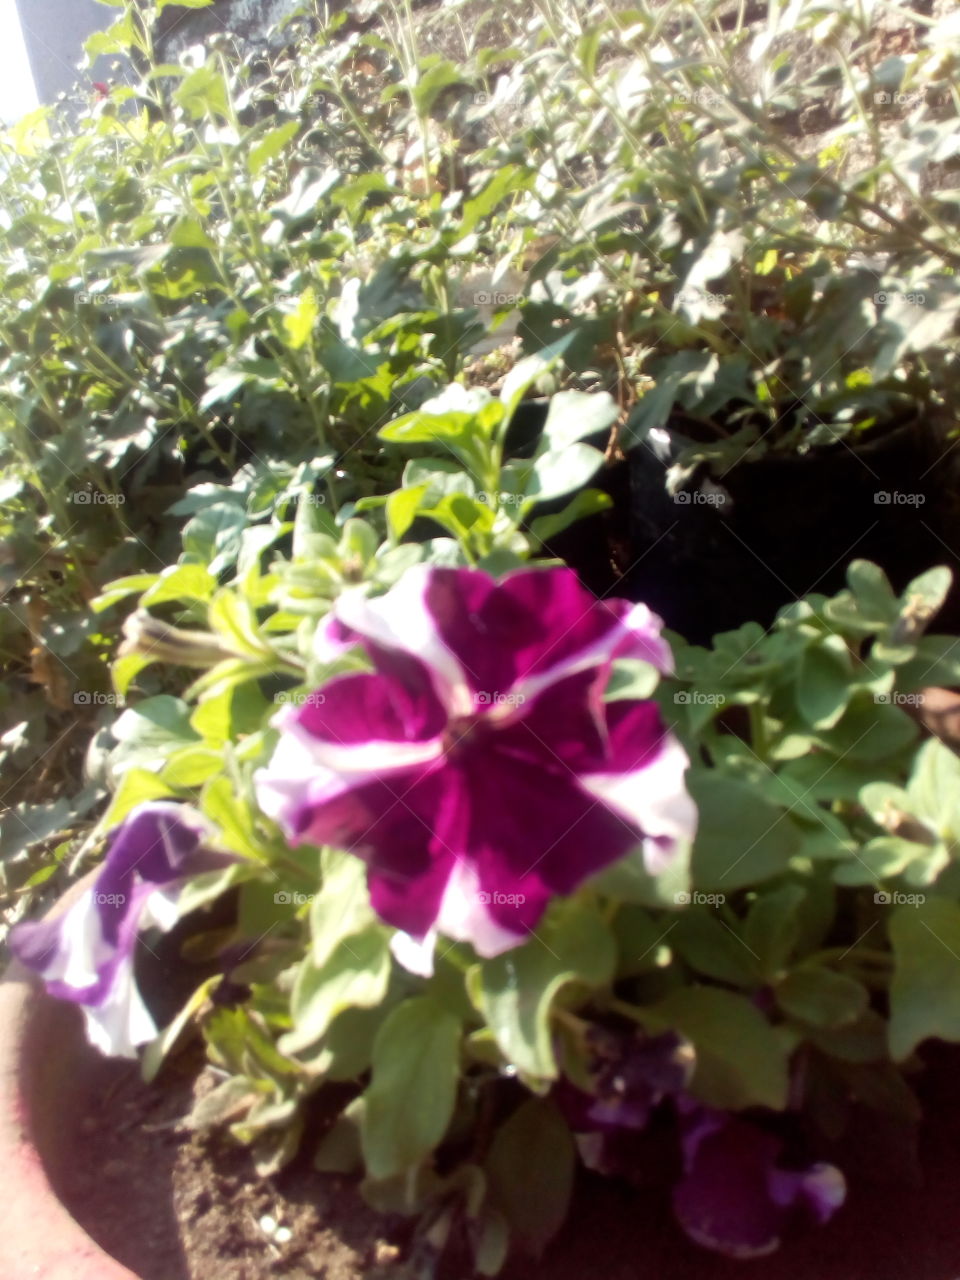 my home flower..